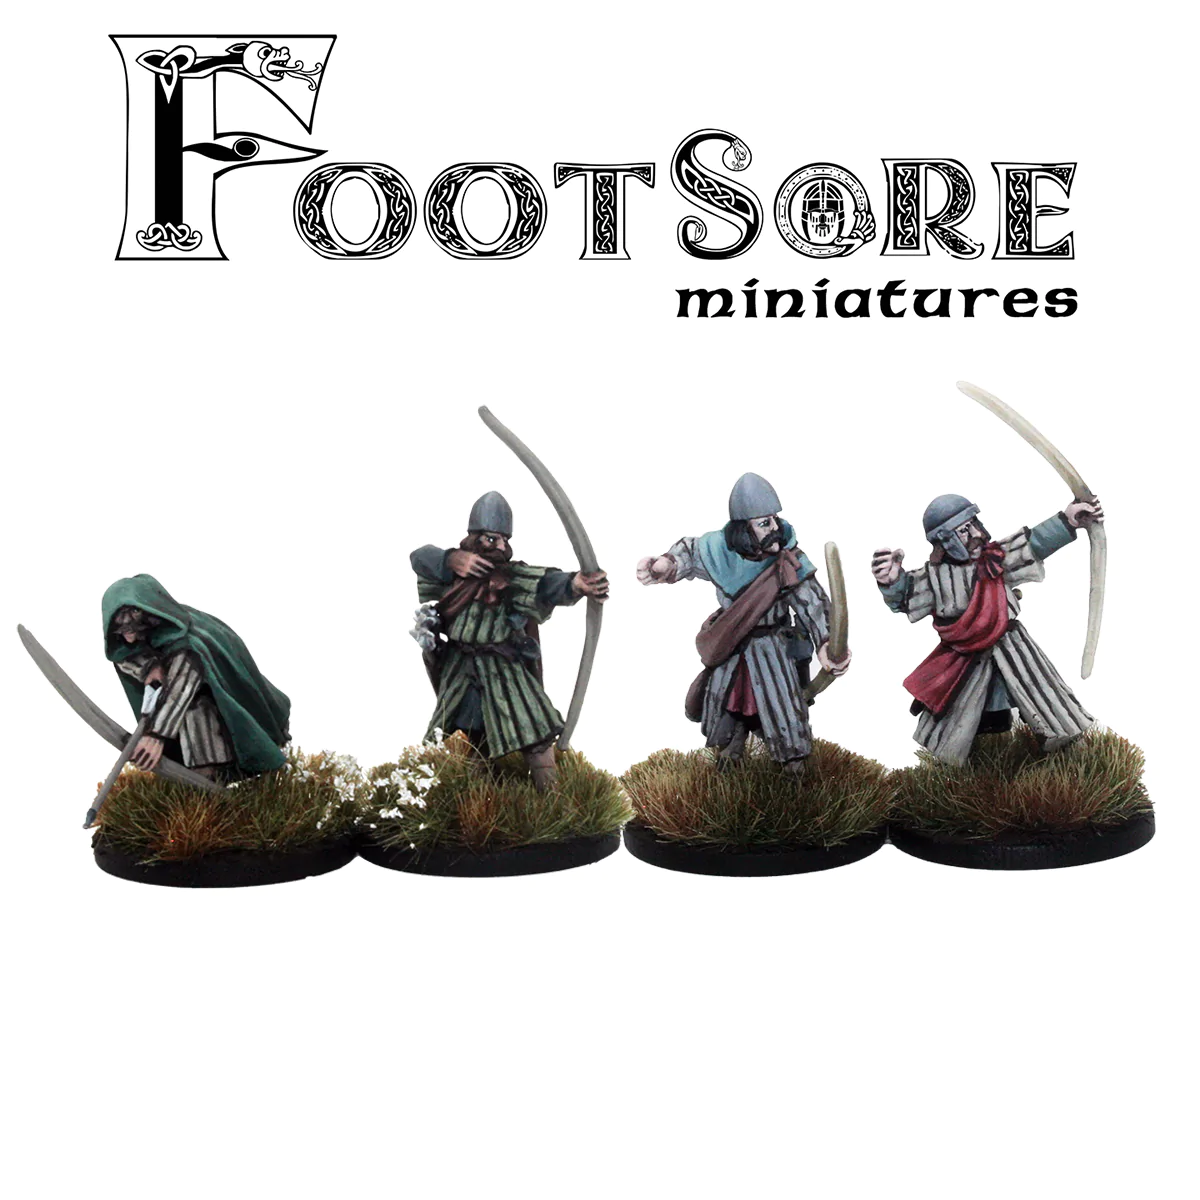 Footsore Miniatures WLS105 Welsh Medieval Archers